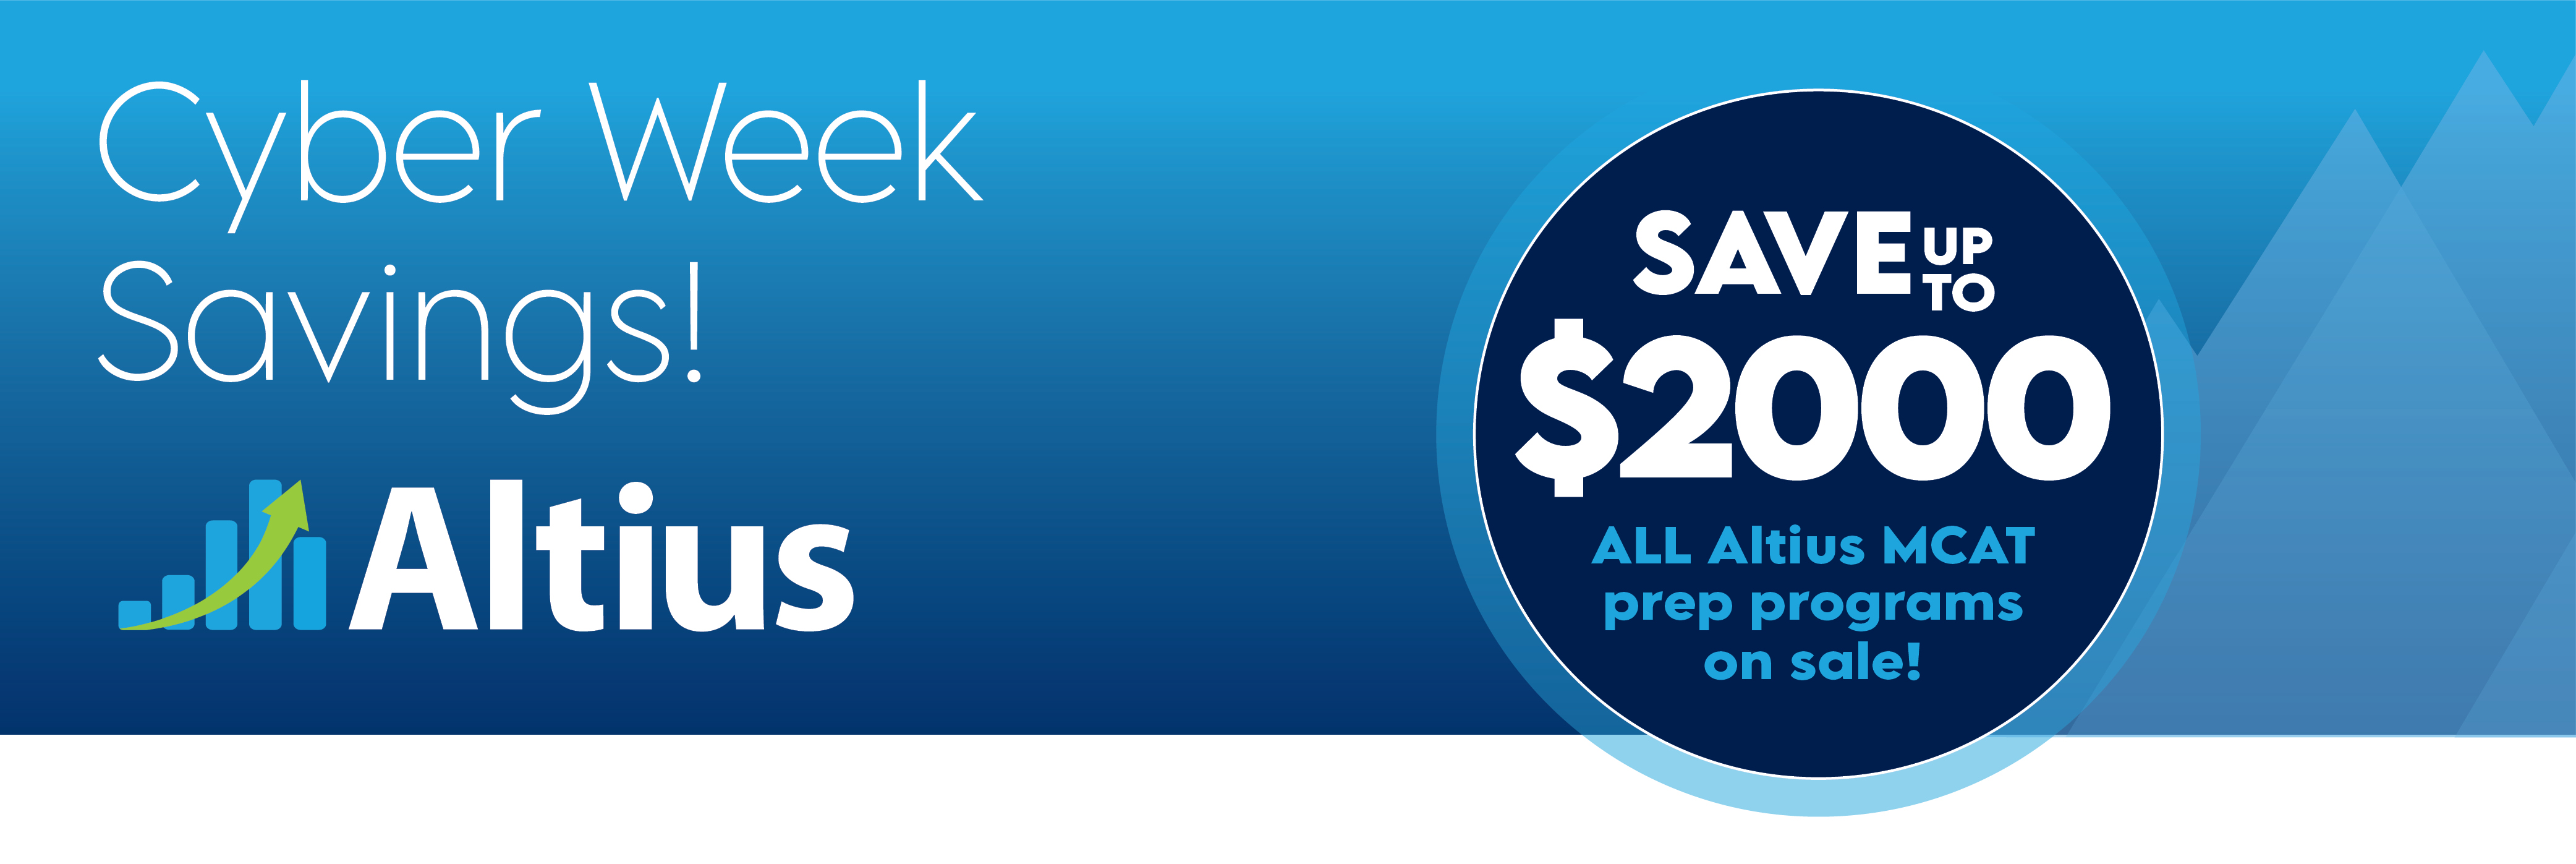 Cyber Week Savings! Save up to $2000